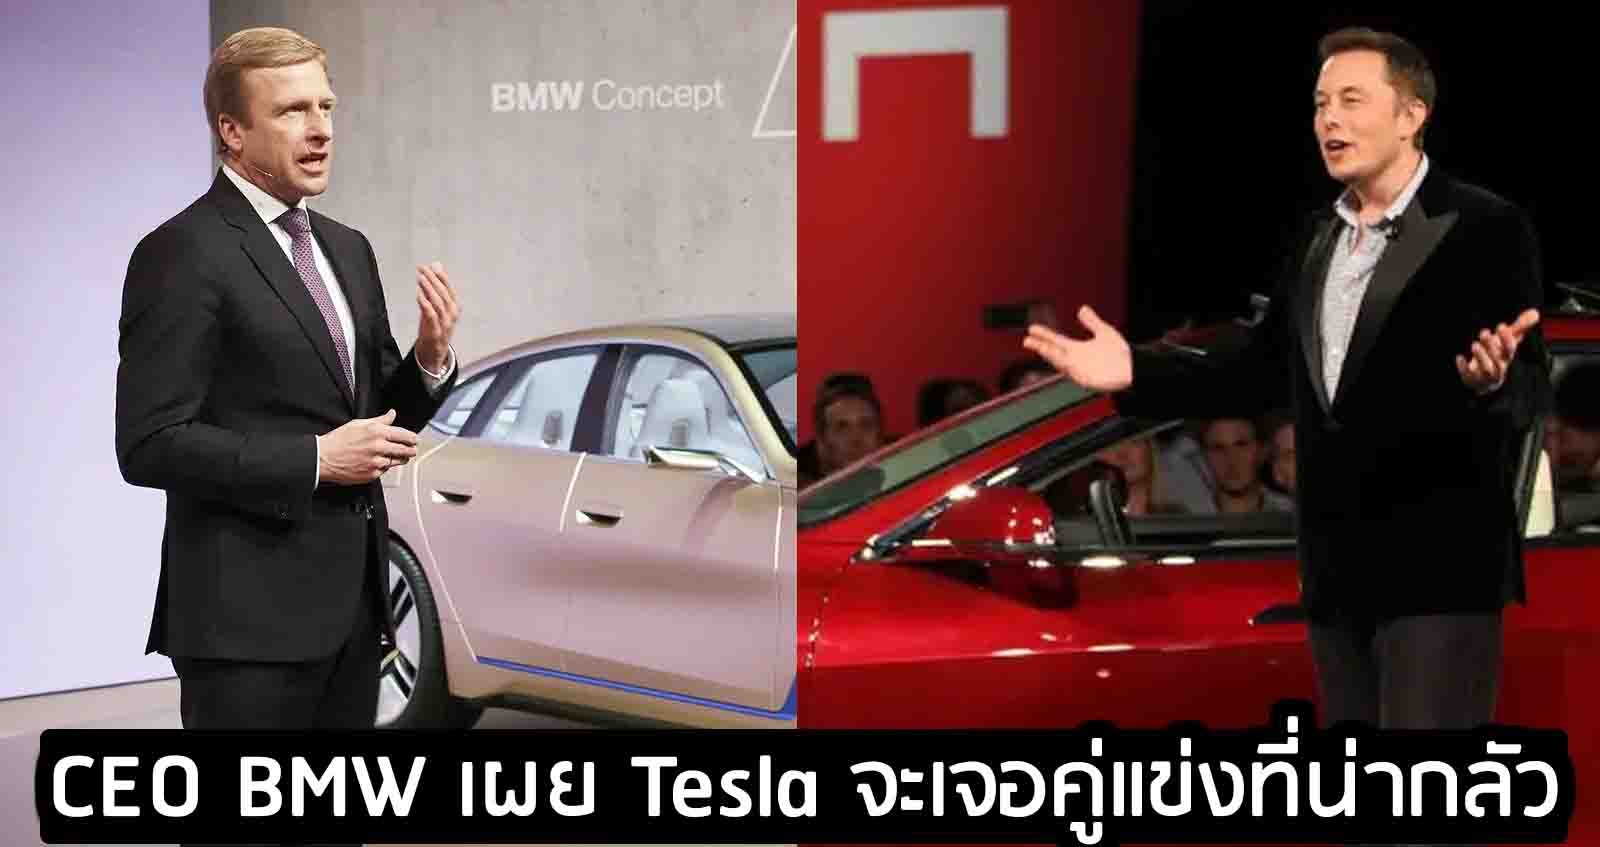 CEO BMW เผย Tesla จะเจอคู่แข่งที่น่ากลัว ในอนาคต เพราะค่ายใหญ่ กำลังรุกหนัก